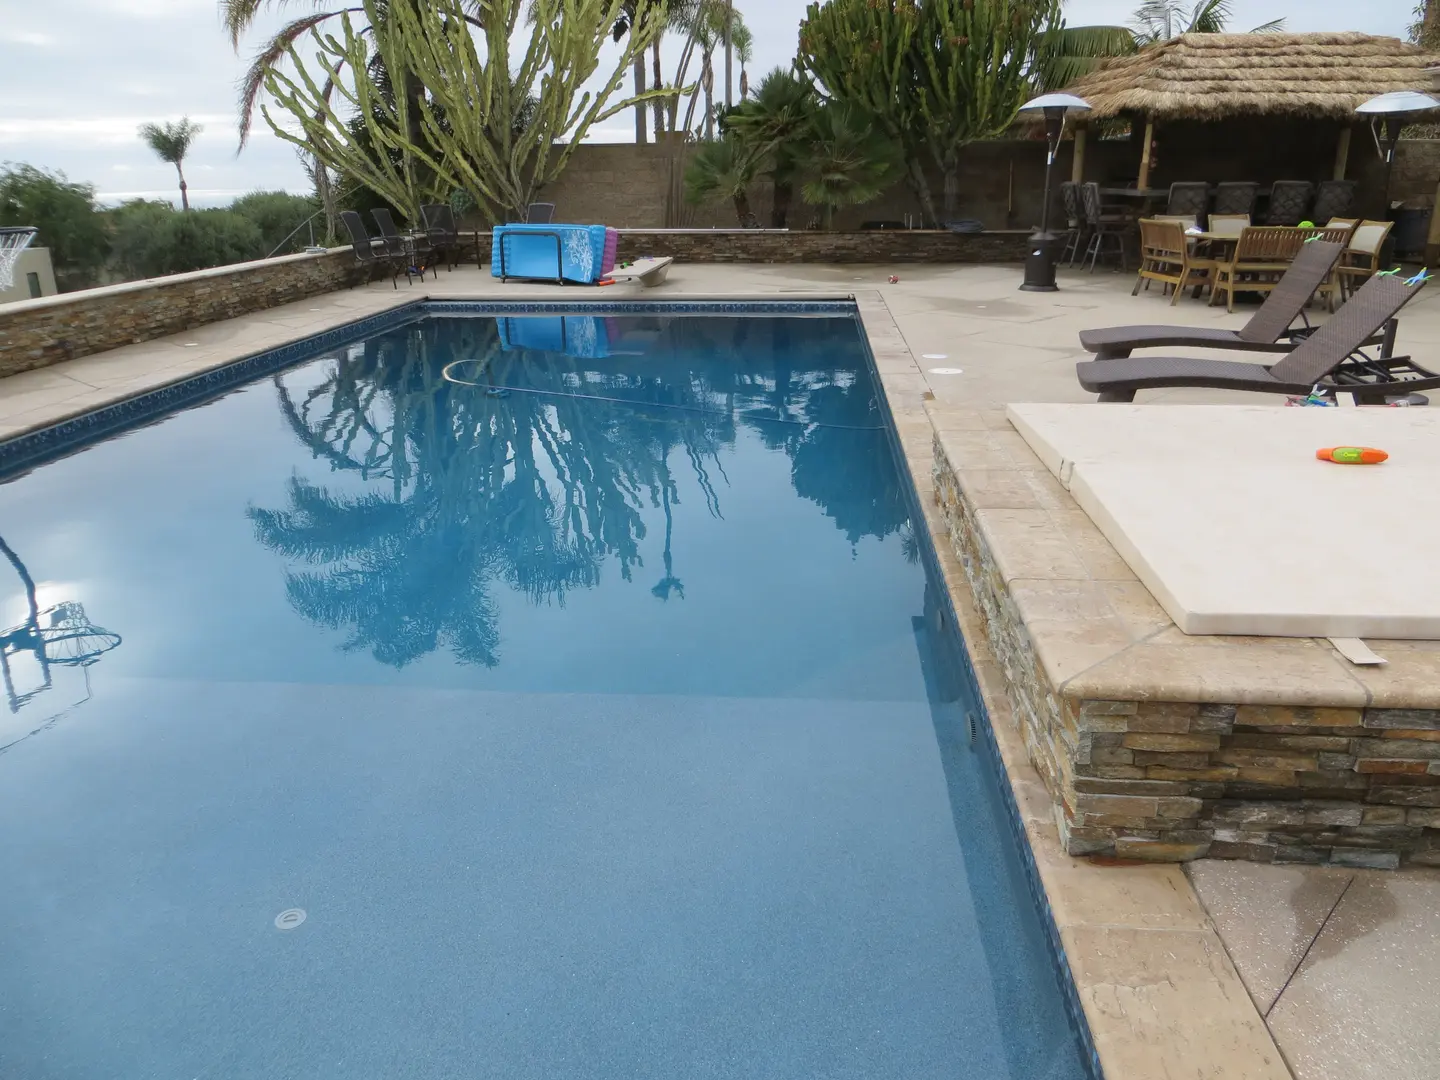 A Blue Pool Area With Limestone Surfacing